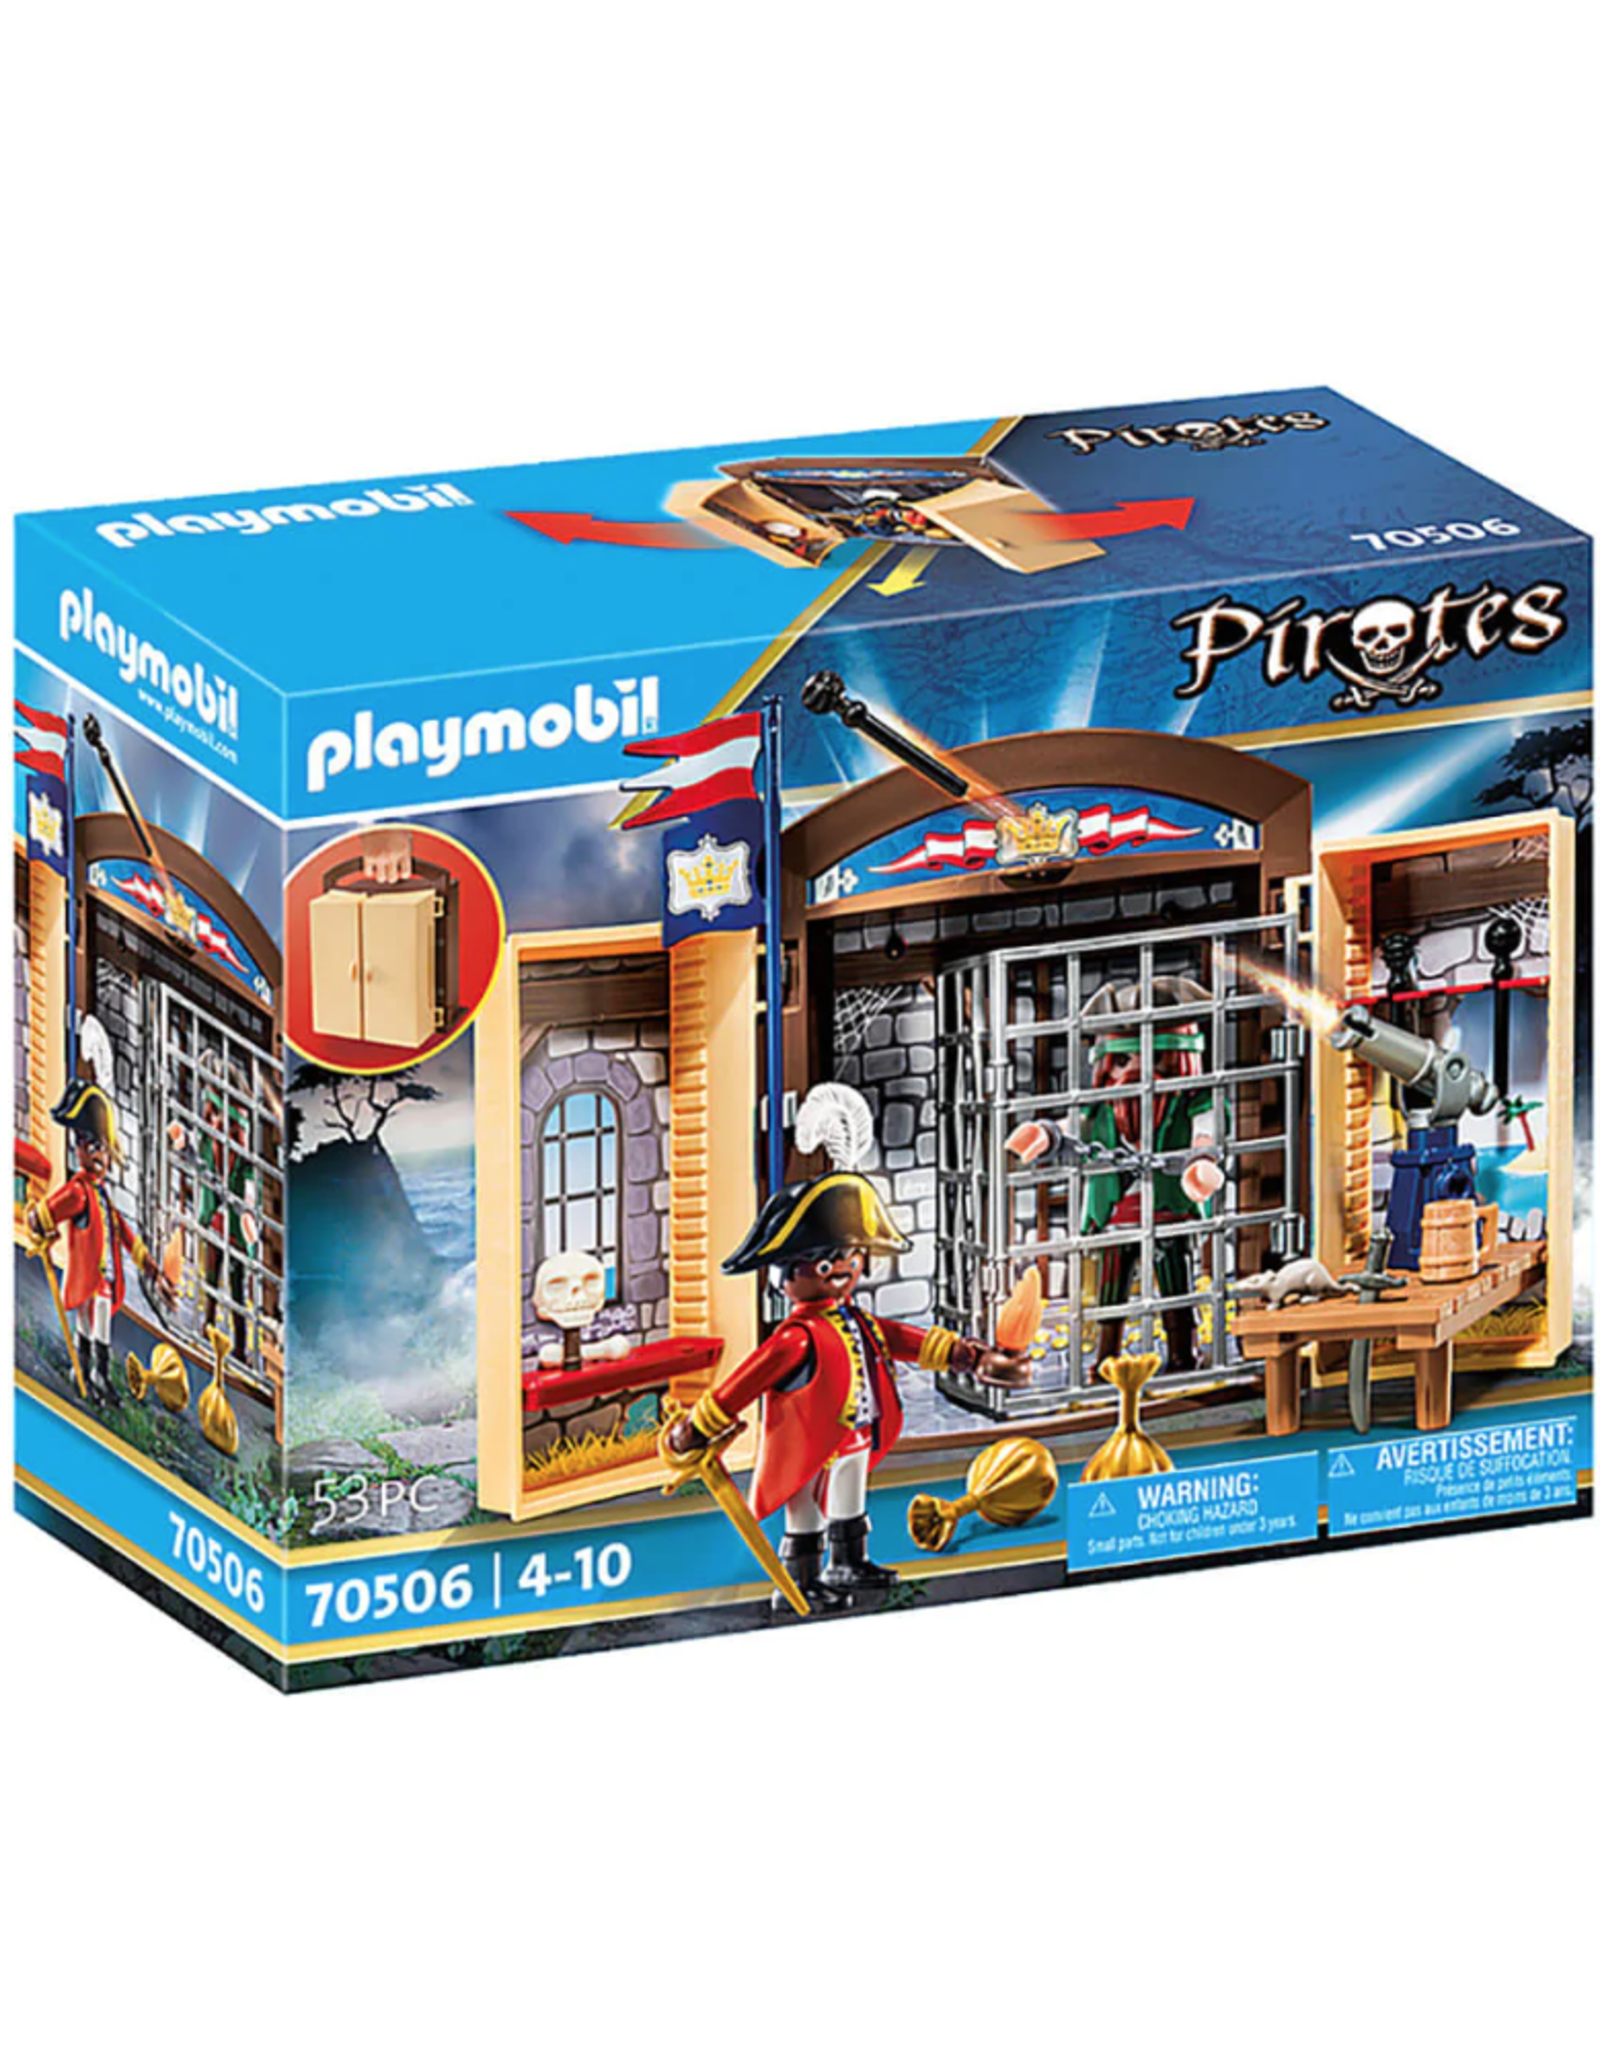 Playmobil Pirate Adventure Play Box